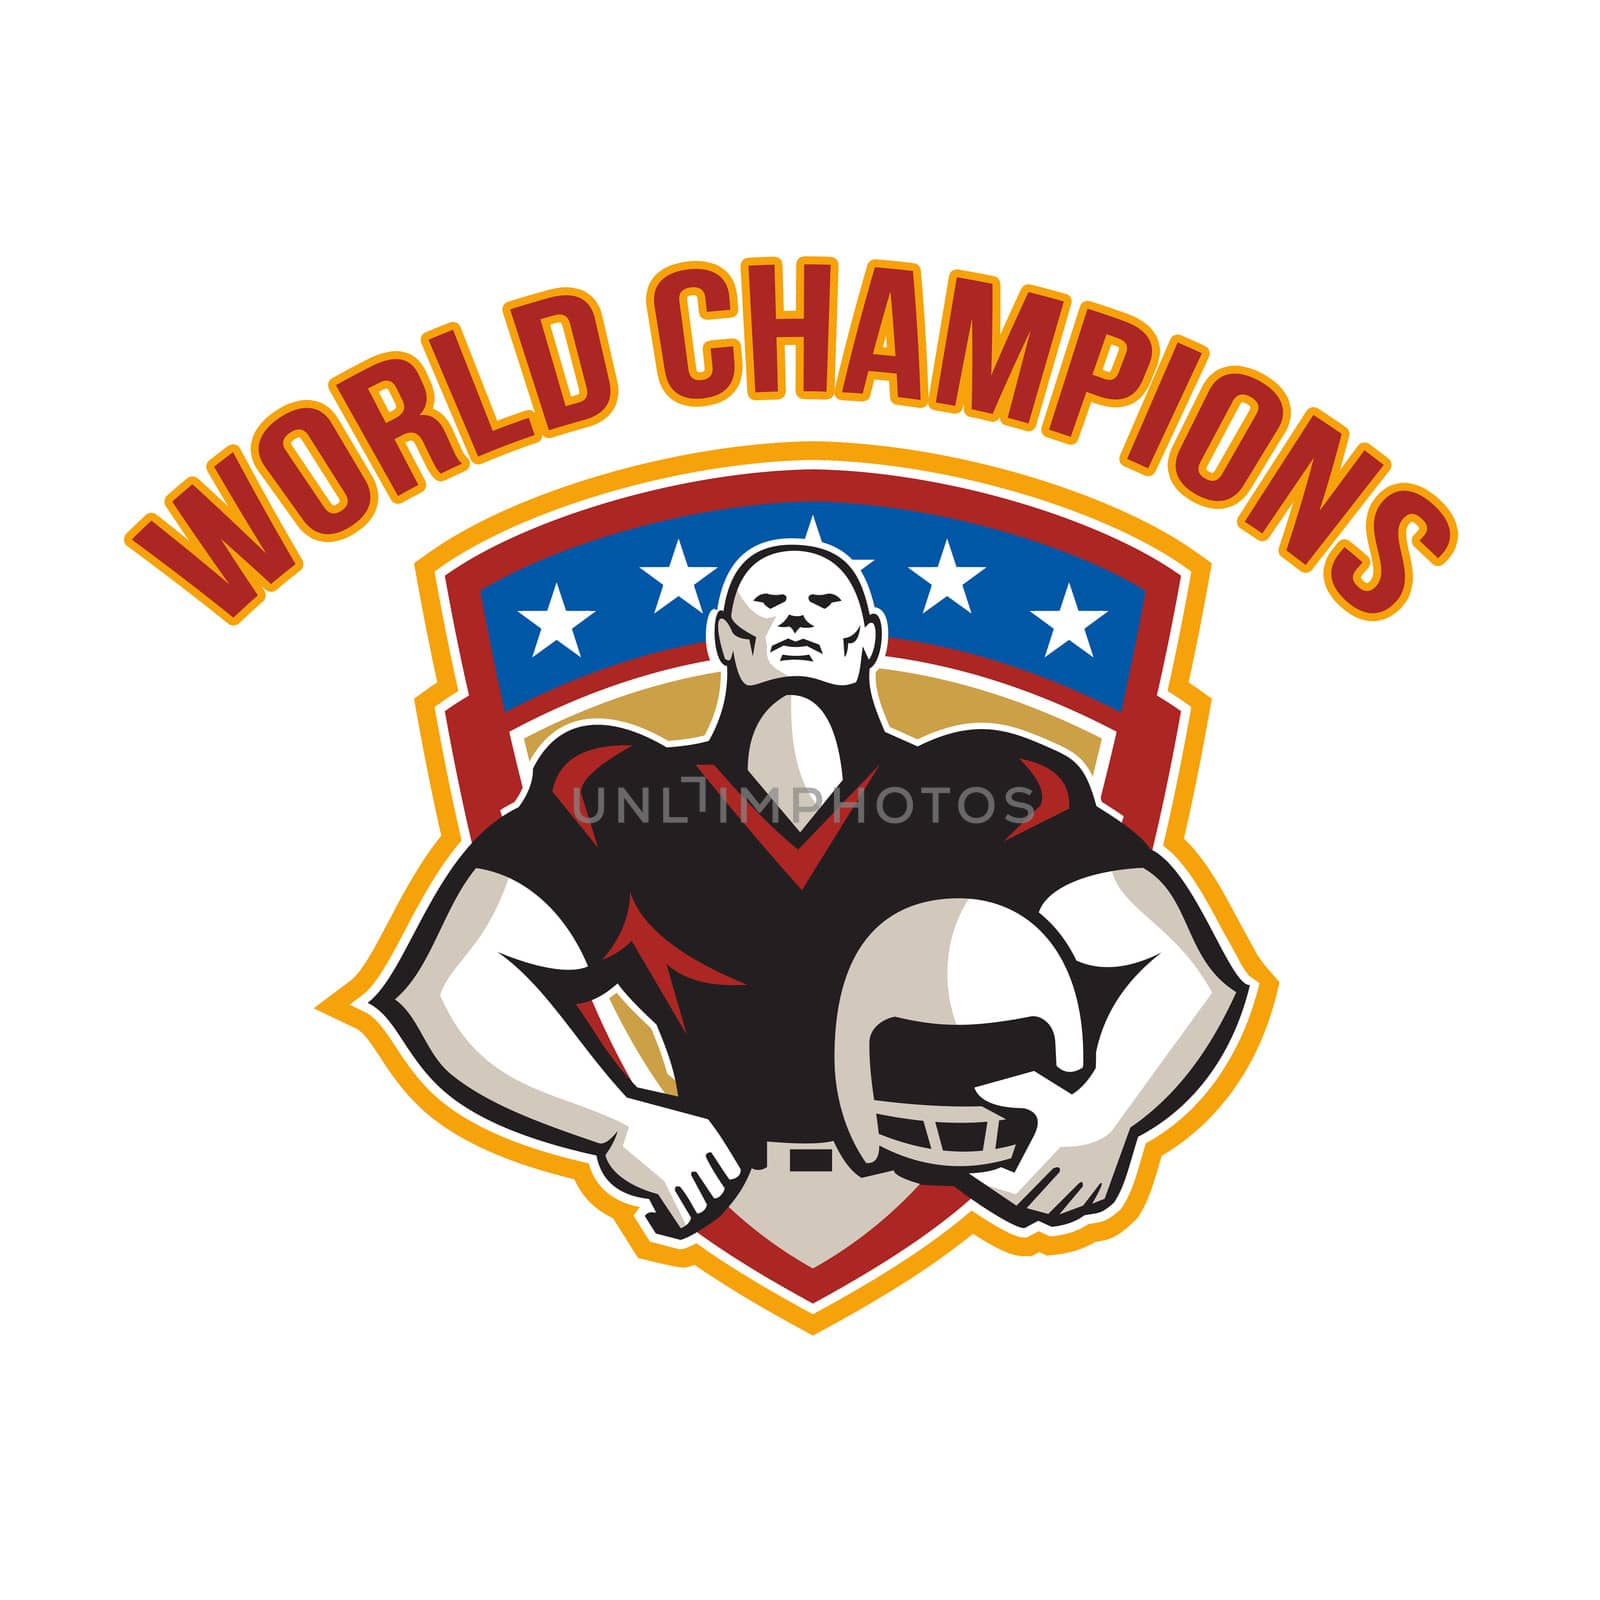 American Football World Champions Shield by patrimonio